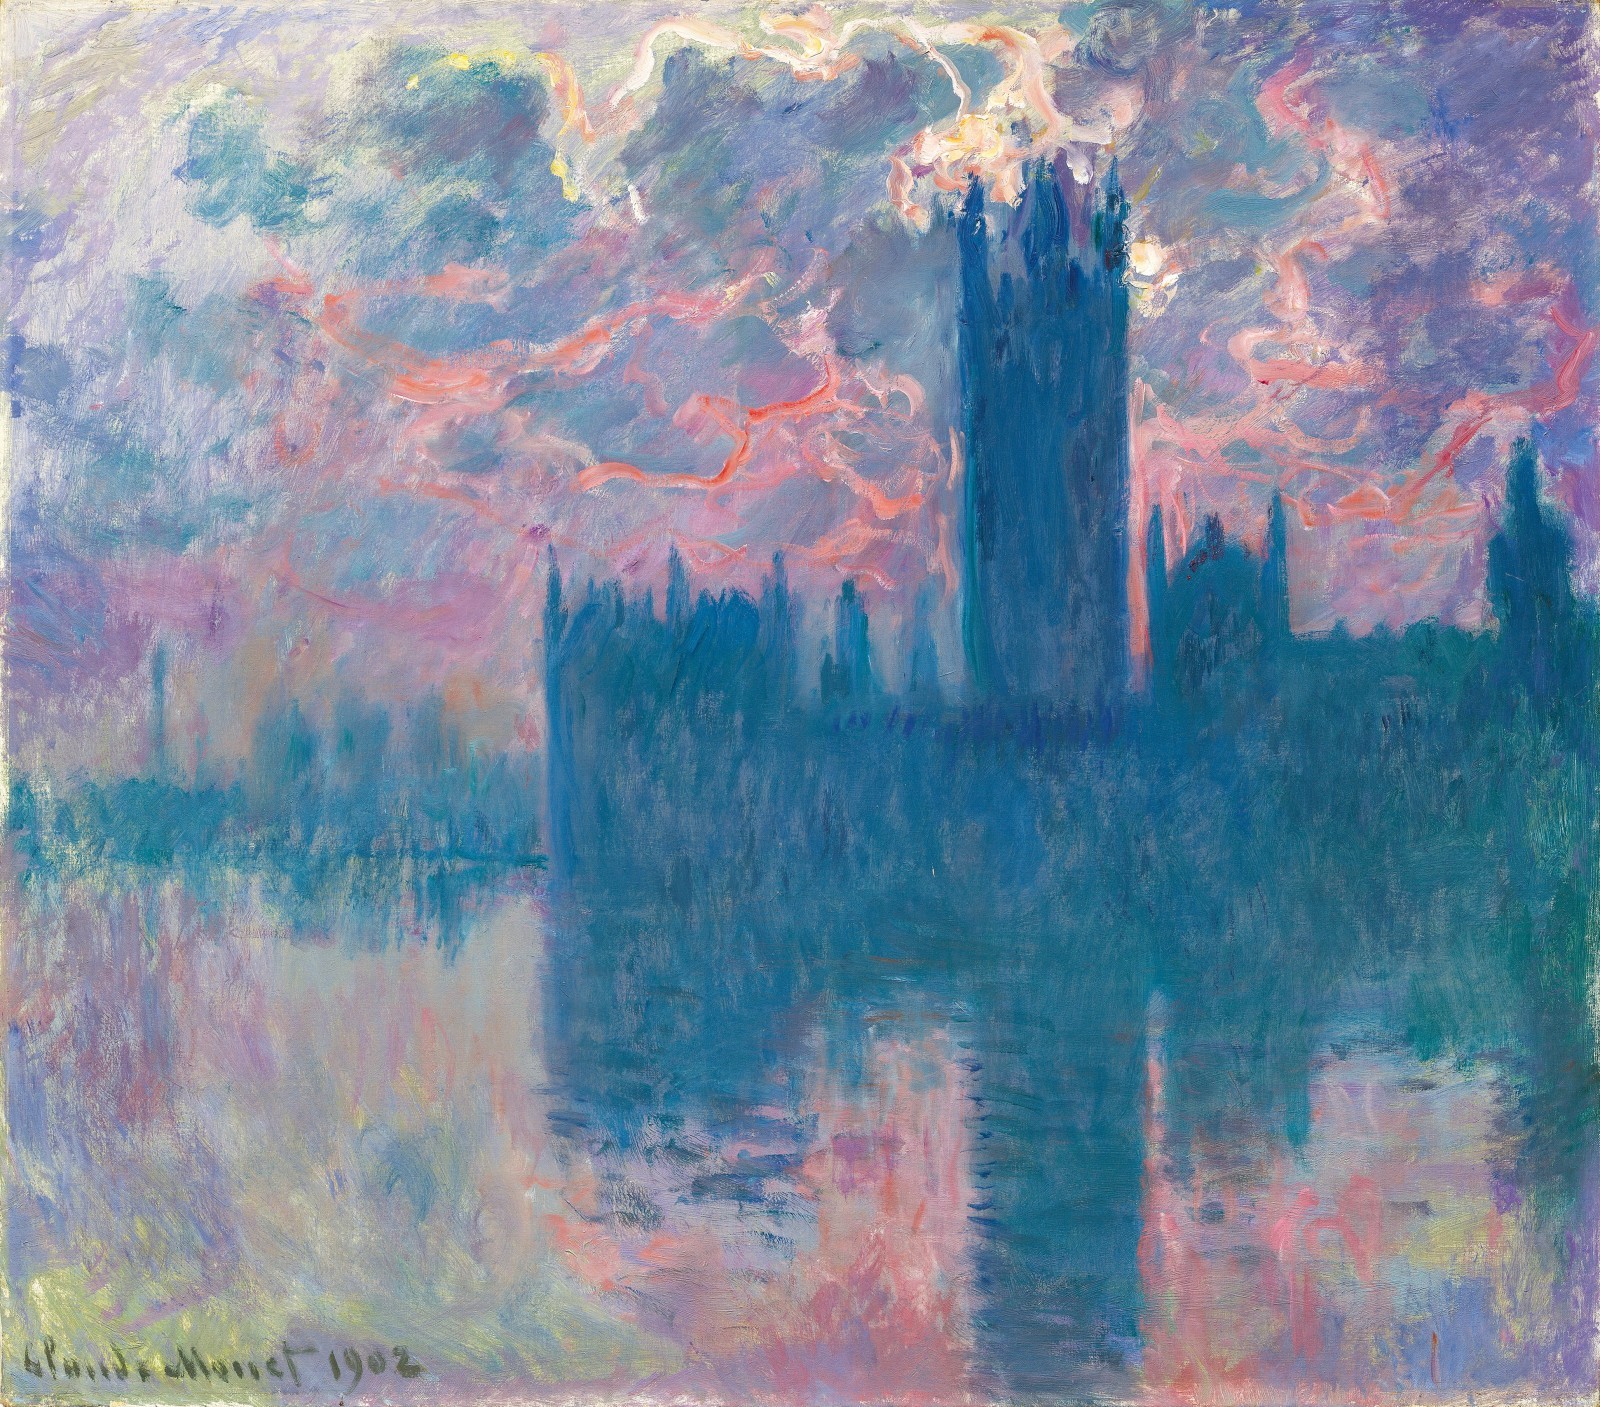 Claude+Monet-1840-1926 (687).jpg